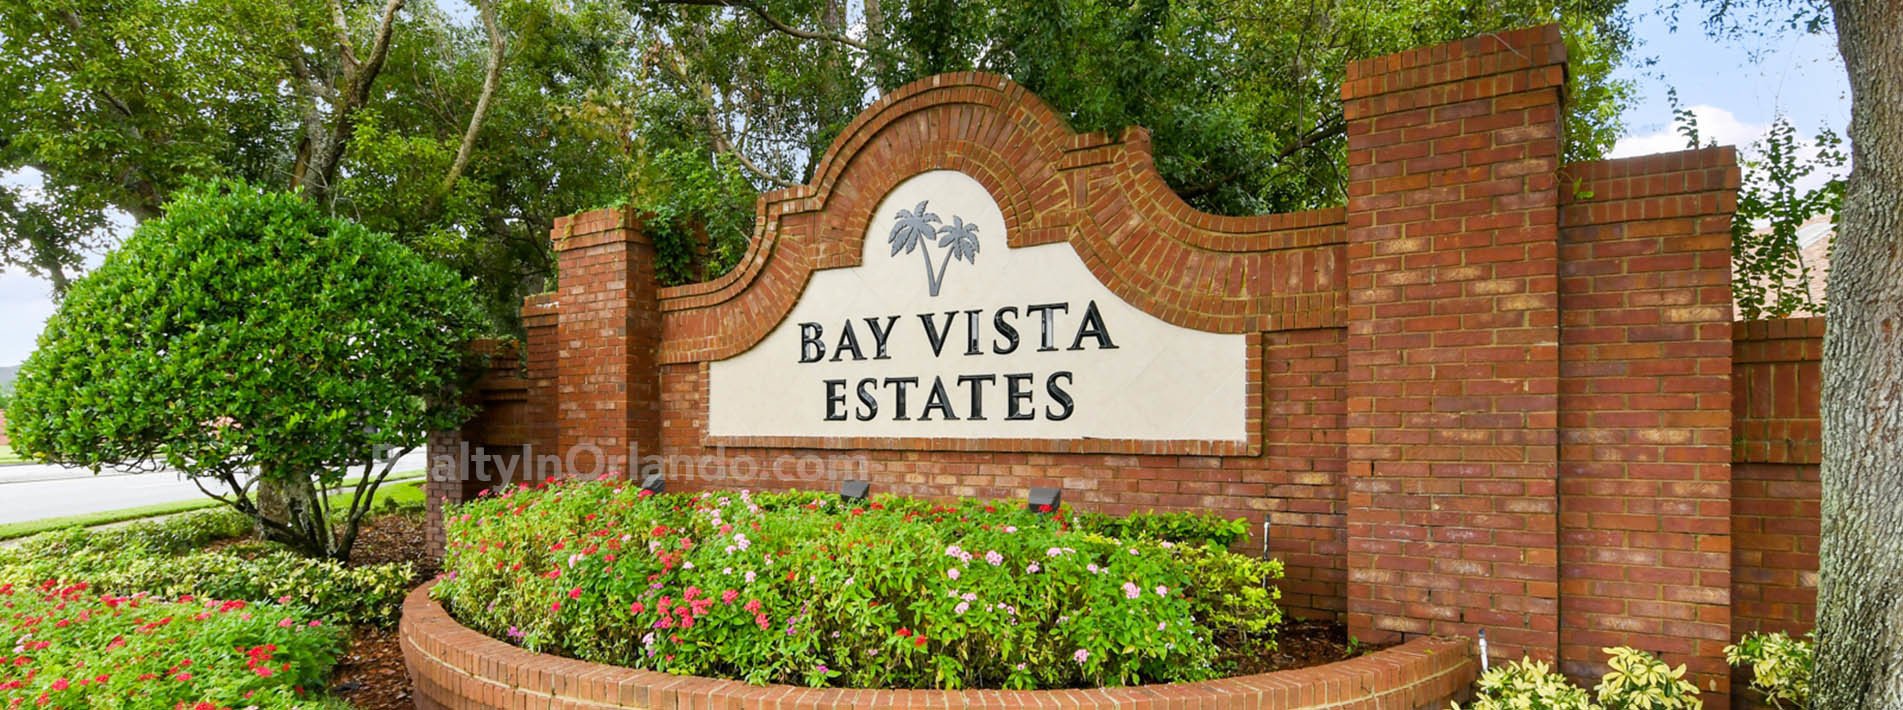 Bay Vista Estates Dr Phillips